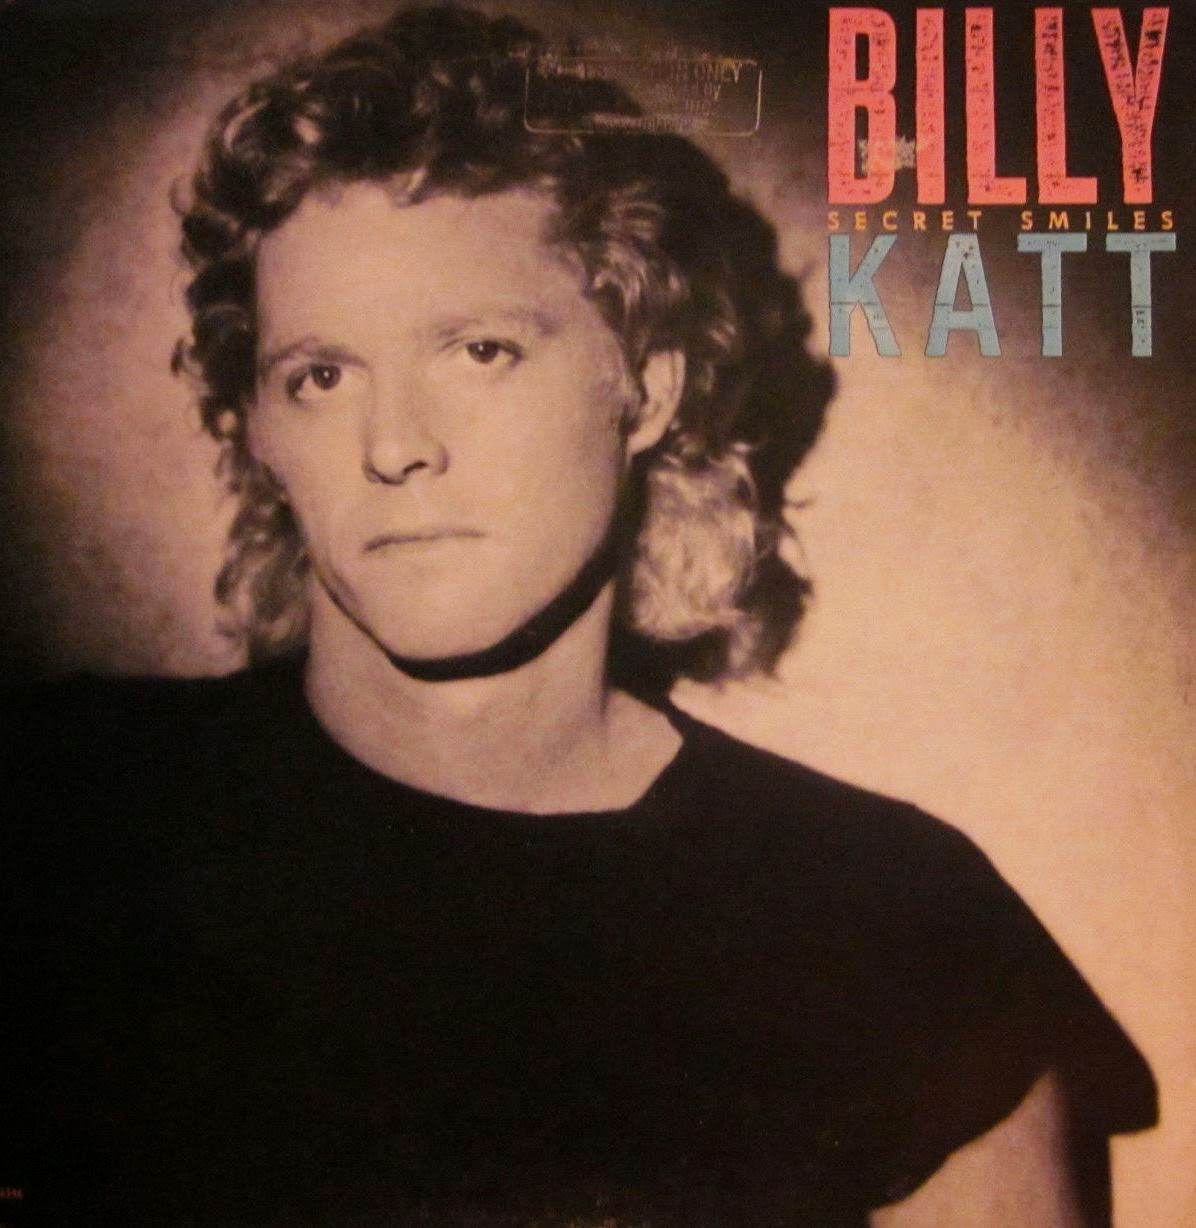 Billy Katt Secret smiles 1982 aor melodic rock west coast music blogspot bands albums